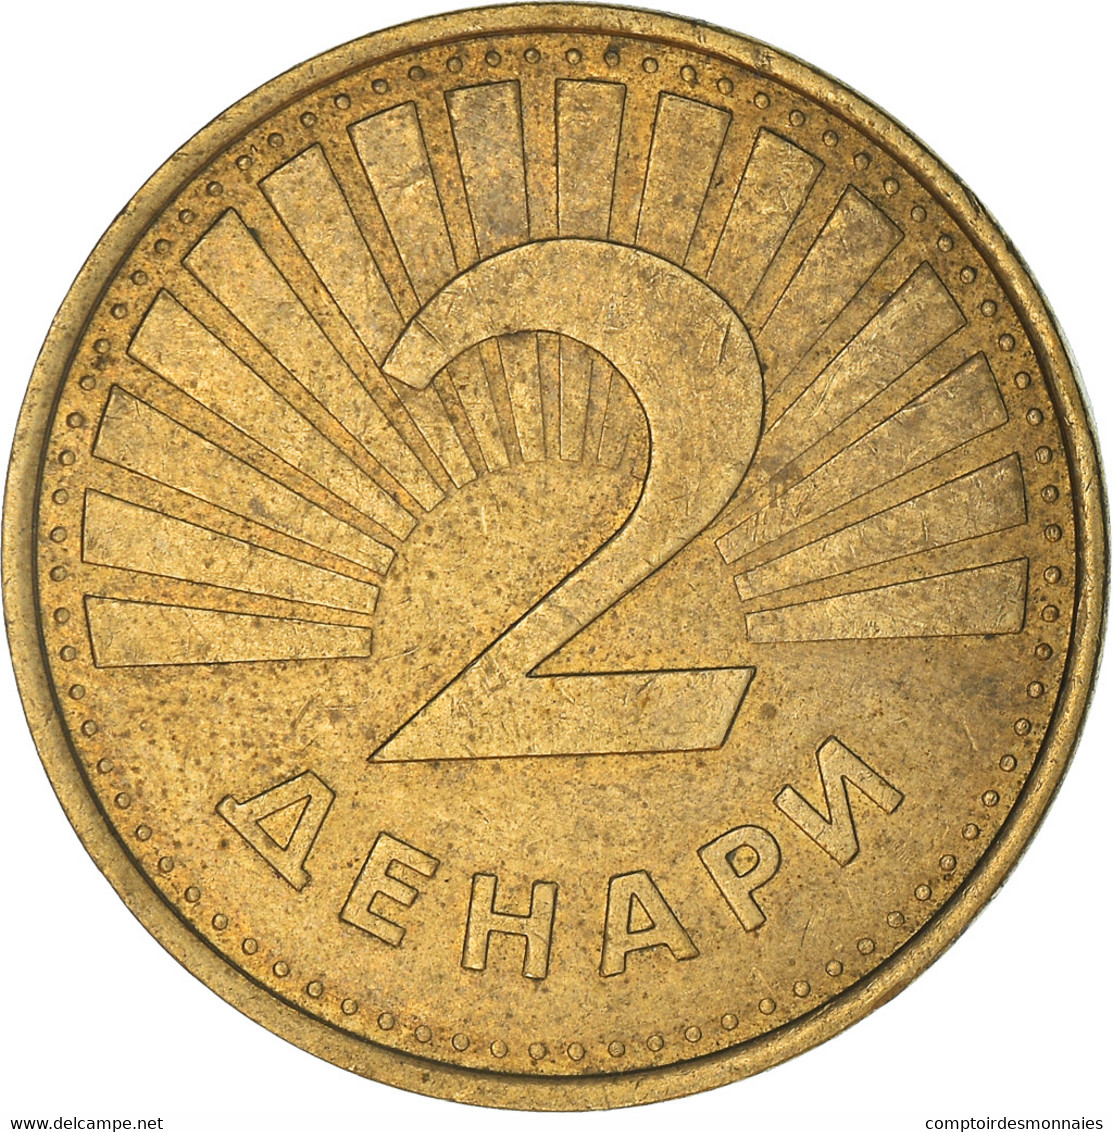 Monnaie, Macédoine, 2 Denari, 2006, TTB, Laiton, KM:3 - Nordmazedonien